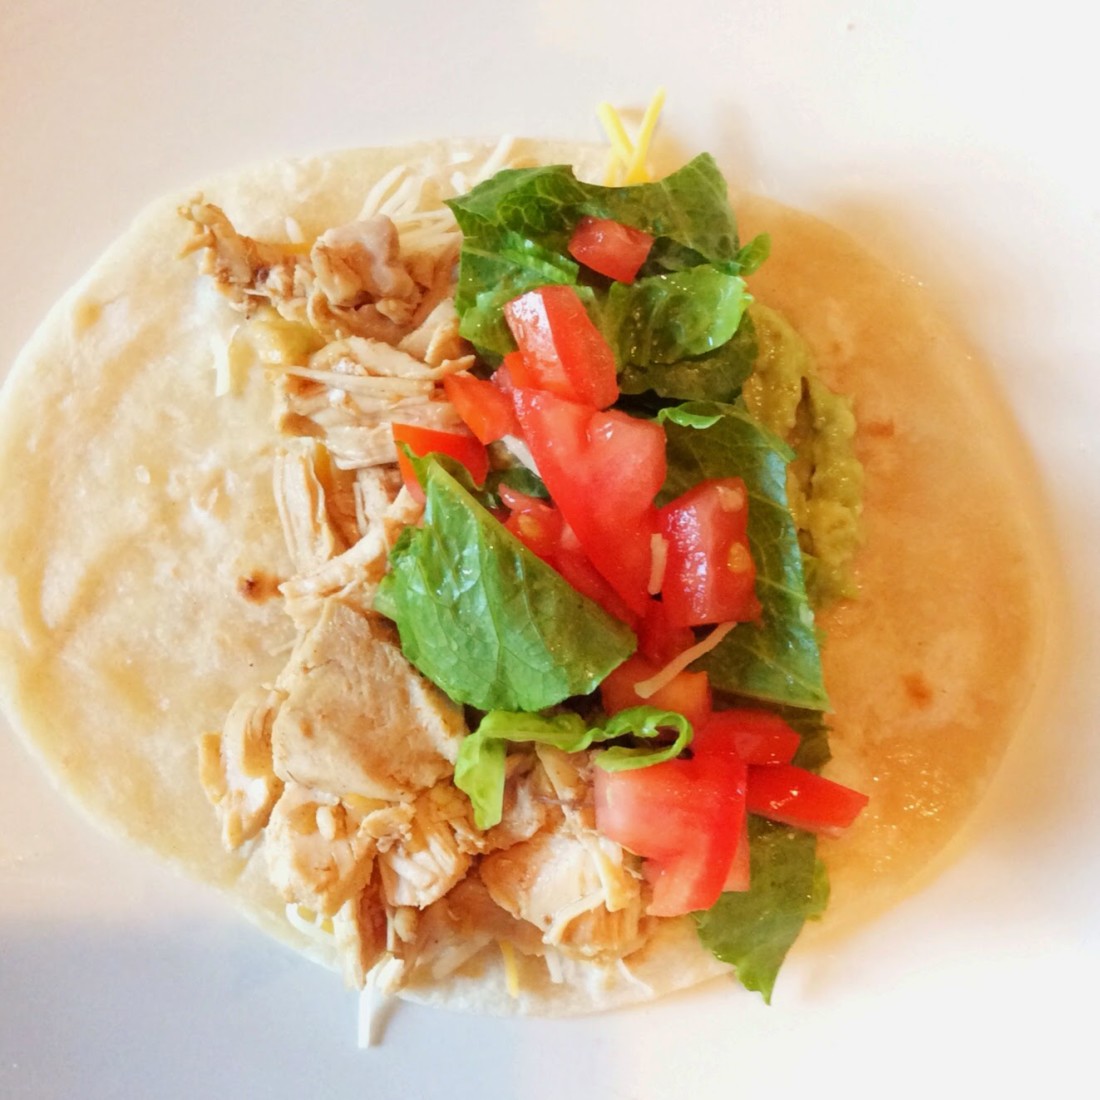 Three-ingredient slow cooker chicken tacos